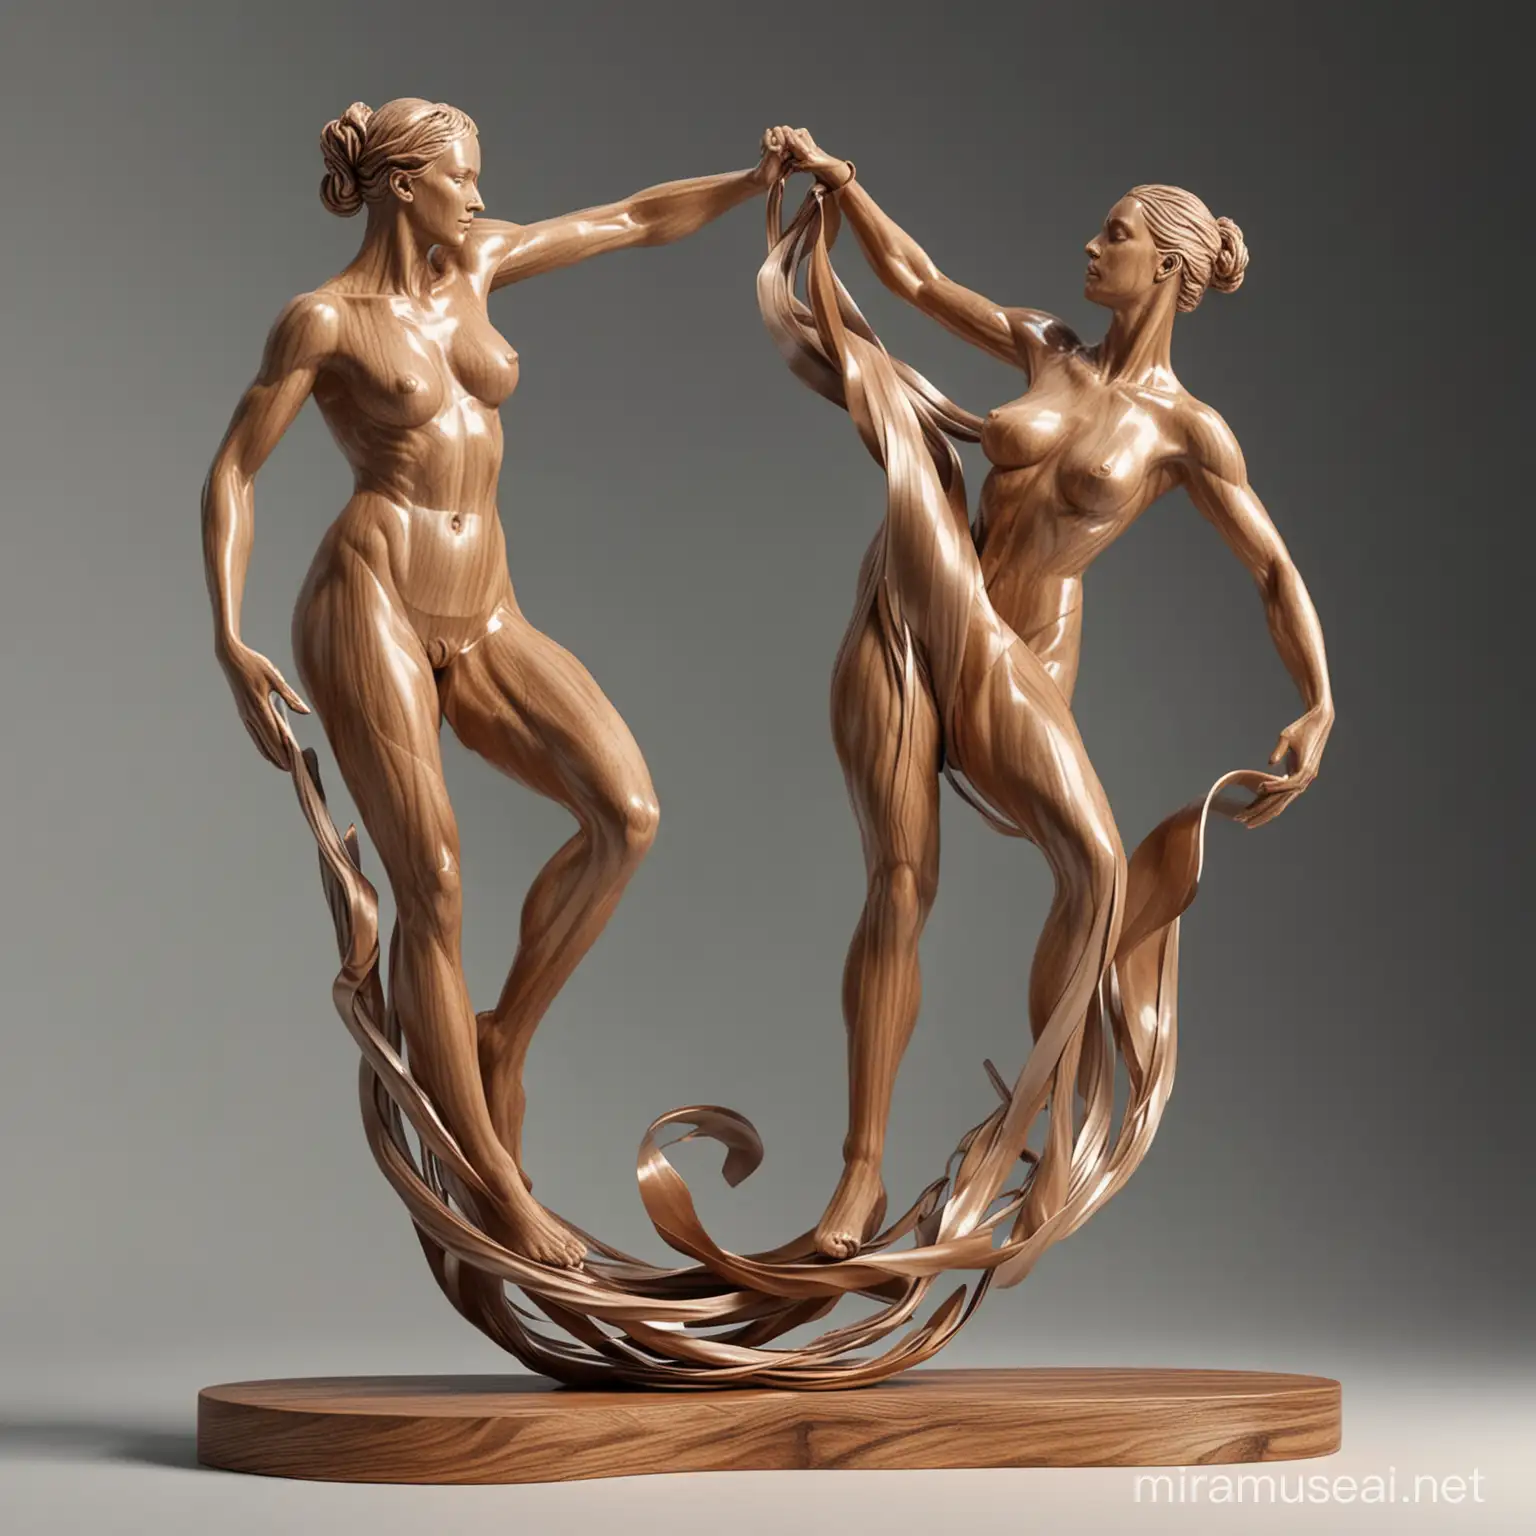 Elegant Ribbon Dance Sculpture Harmonious Blend of Metallic and Wooden Textures